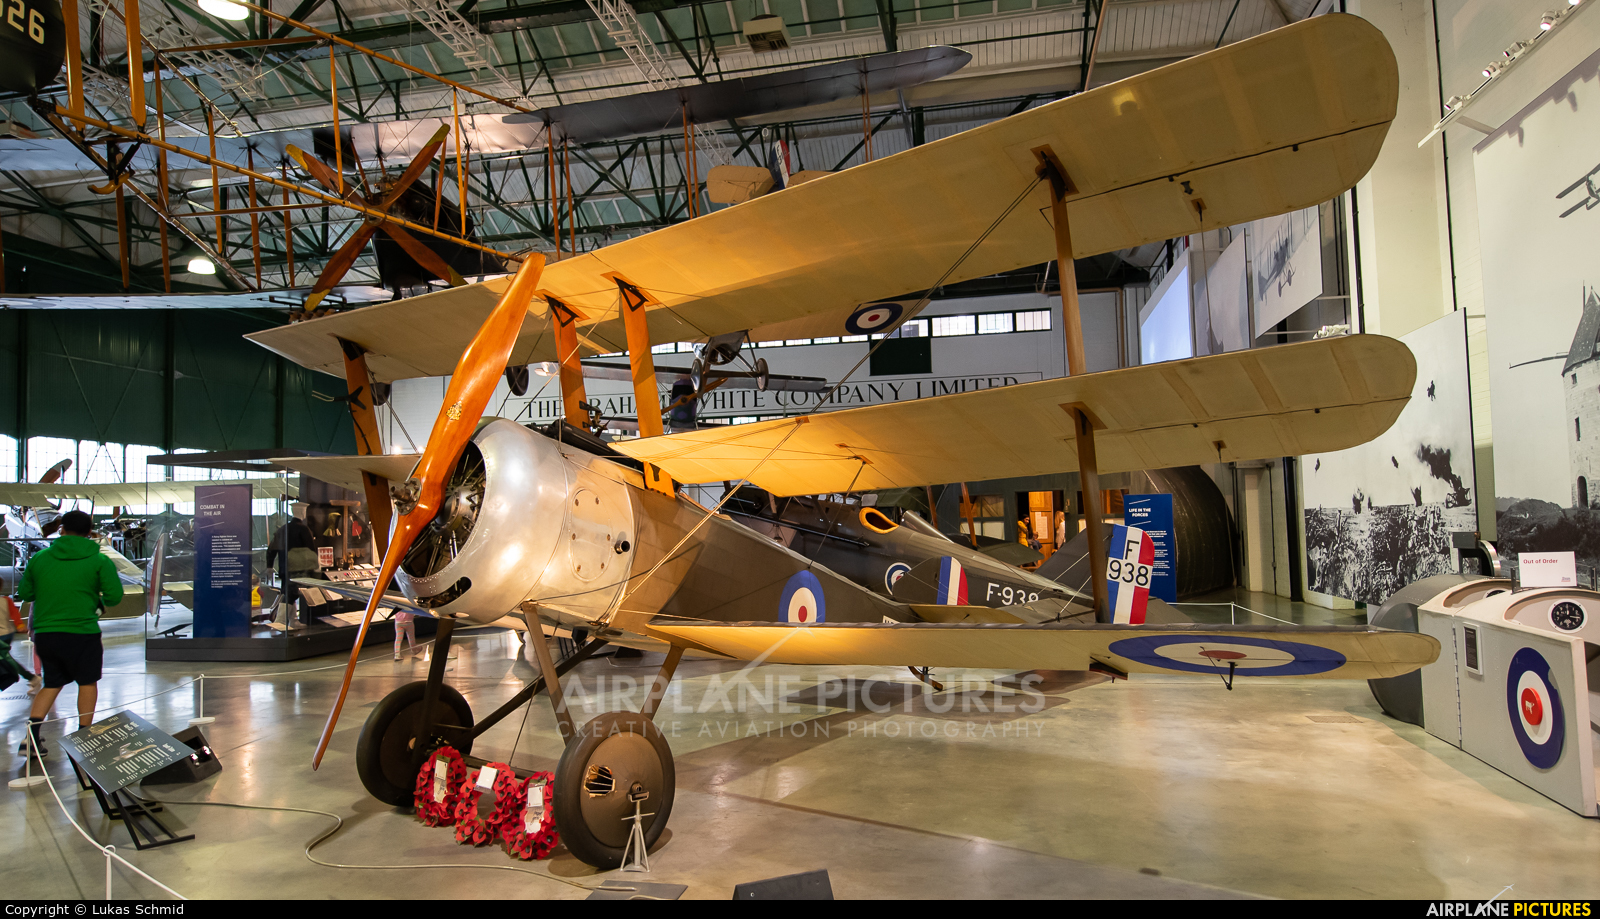 UK - Army Air Corps N5912 aircraft at Hendon - RAF Museum